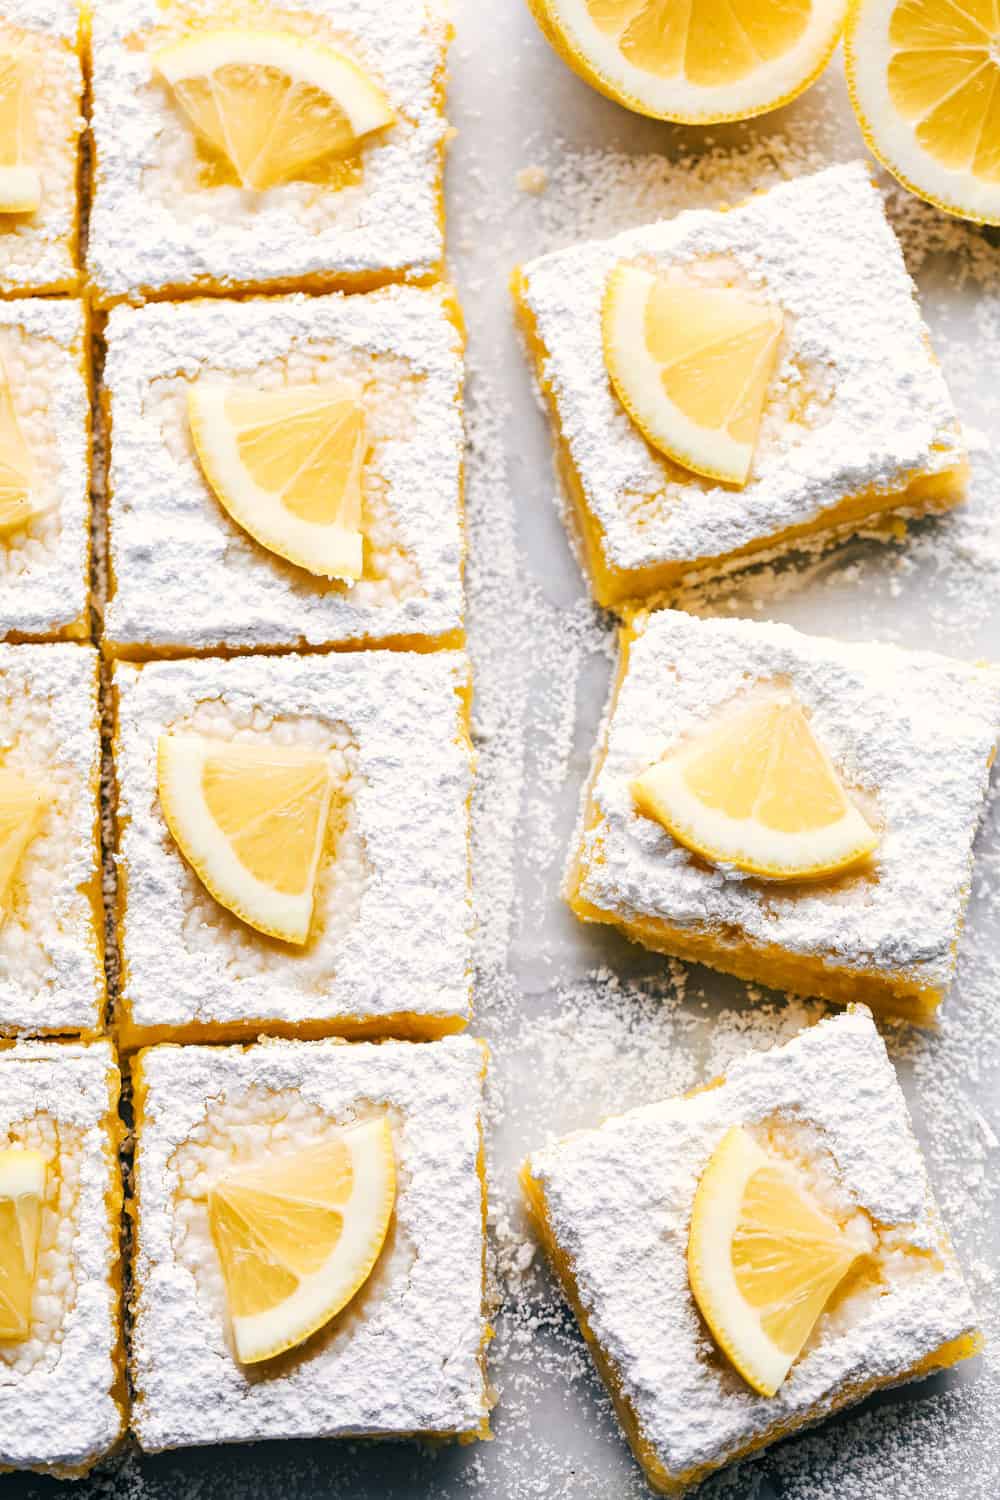 Lemon bars cut into squares.